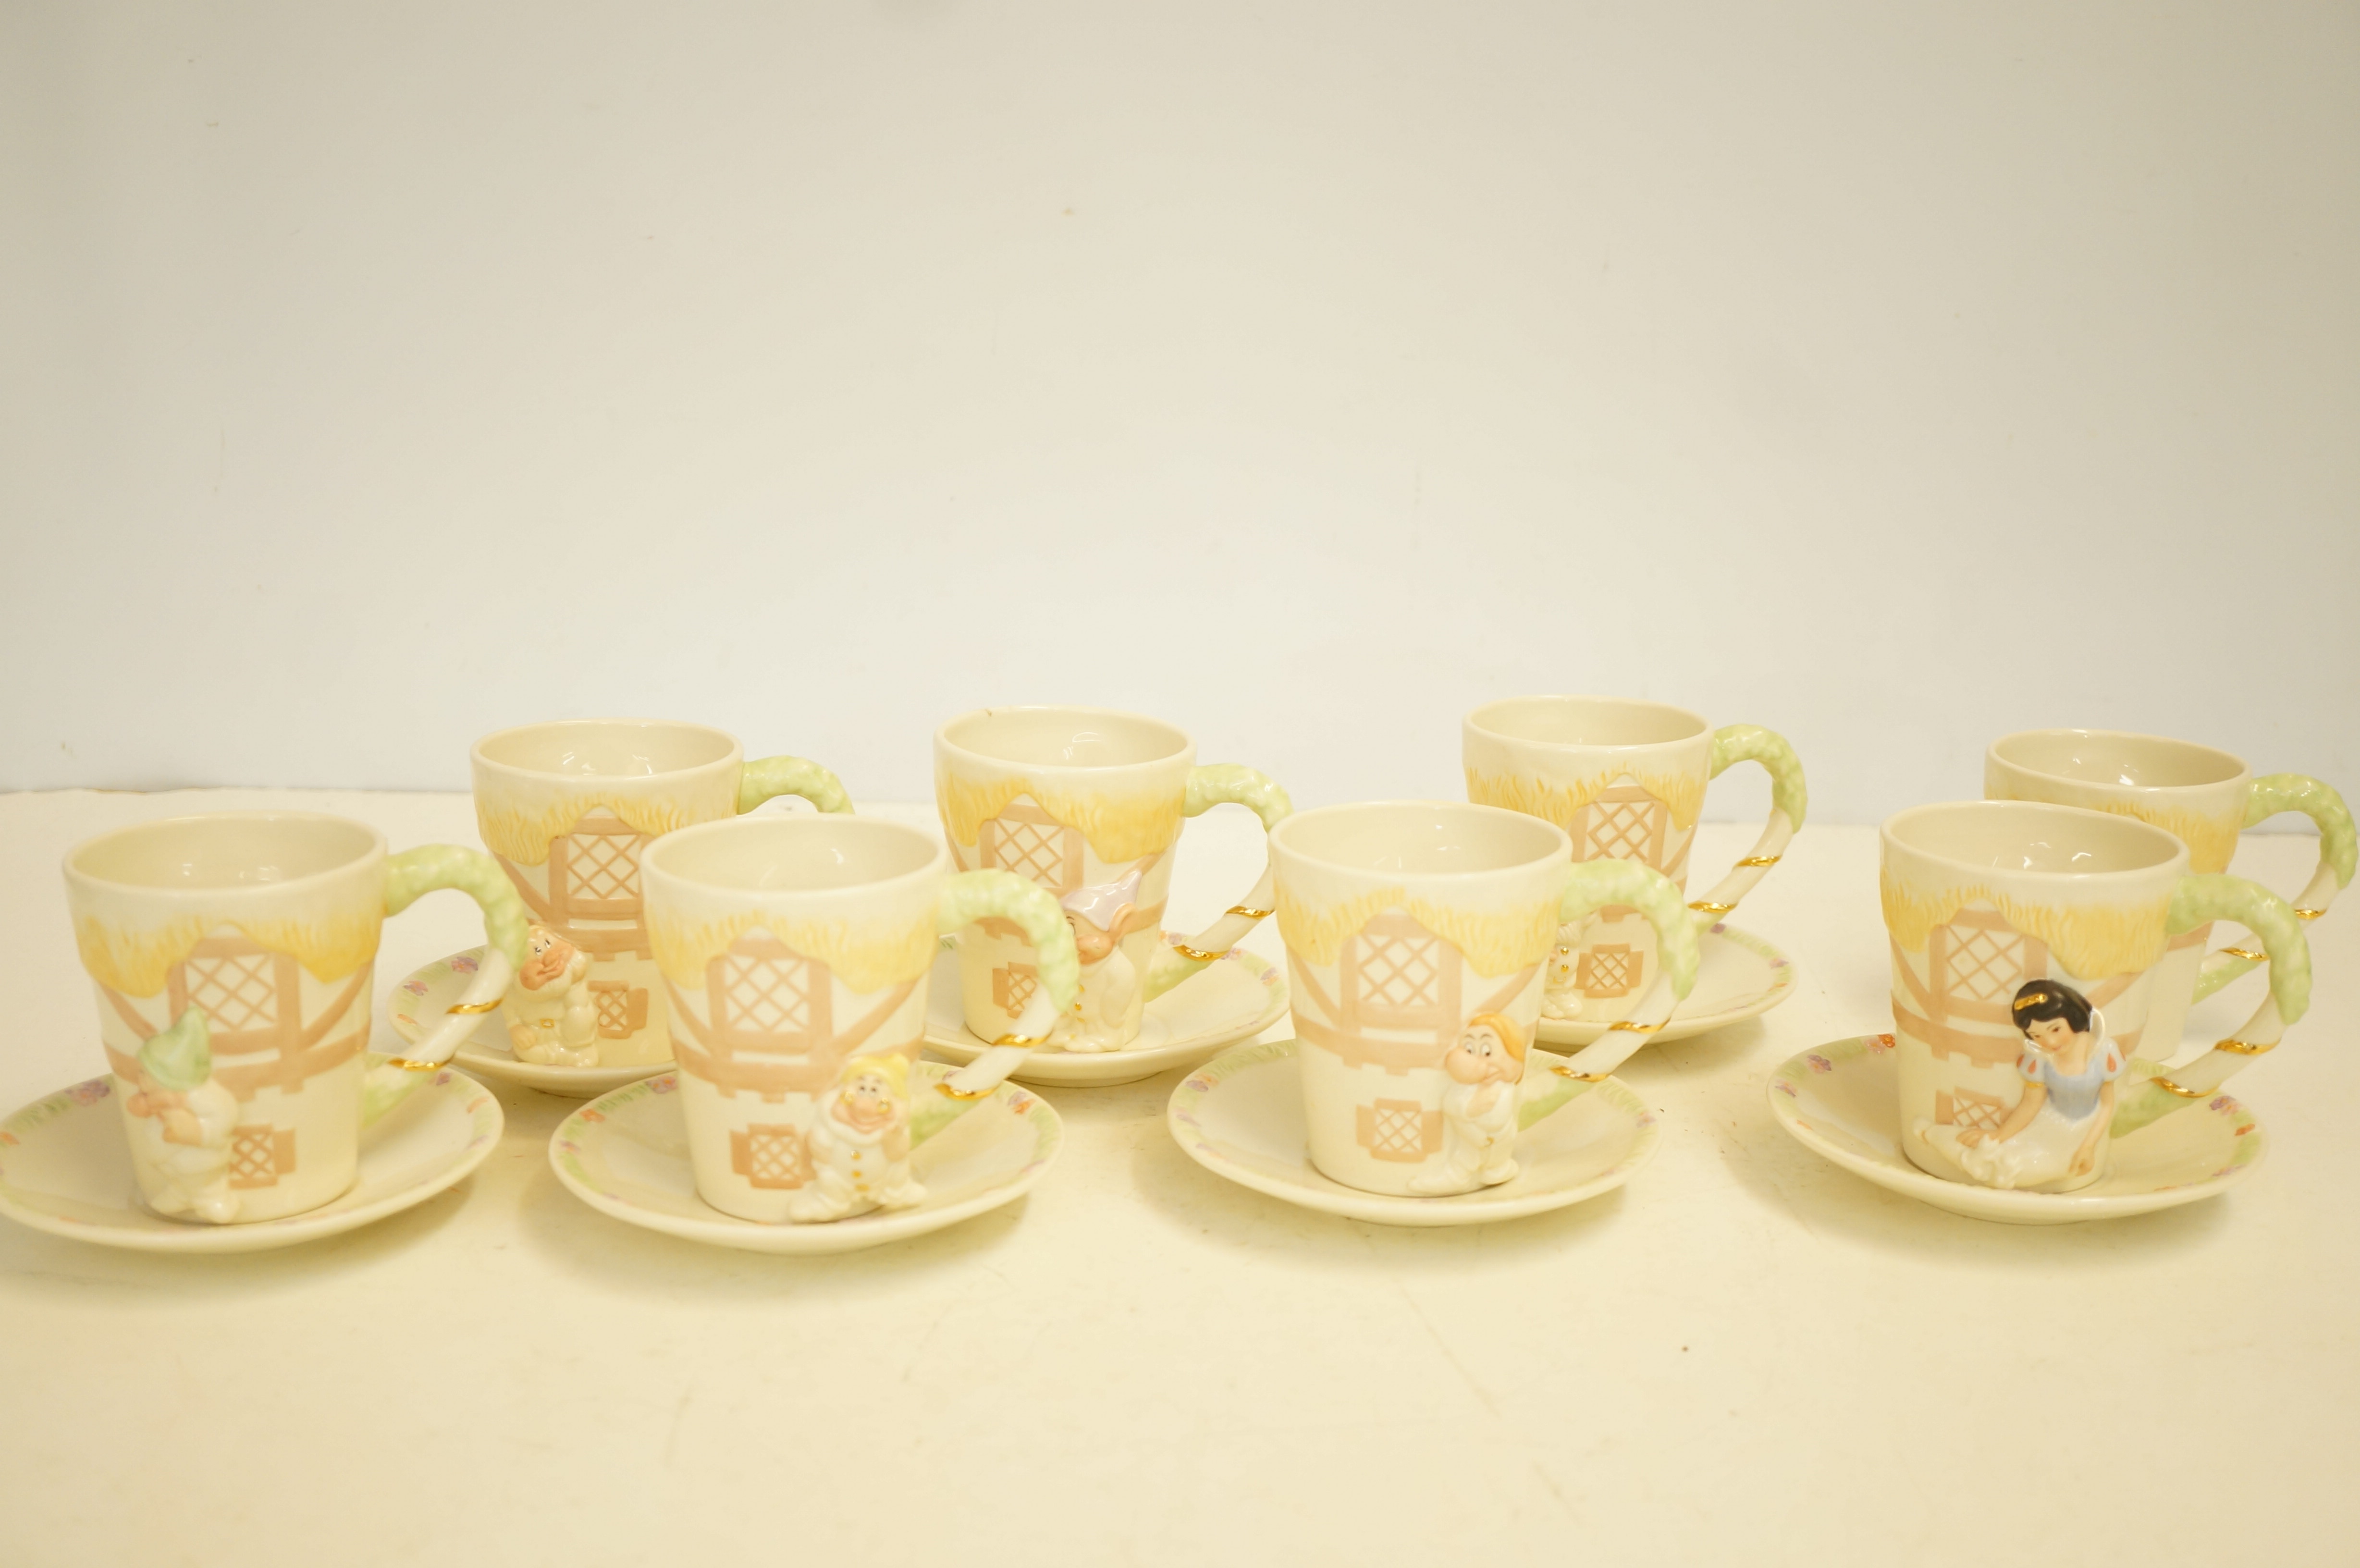 The Snow white tea cup set Disney 2005 - 7 saucers